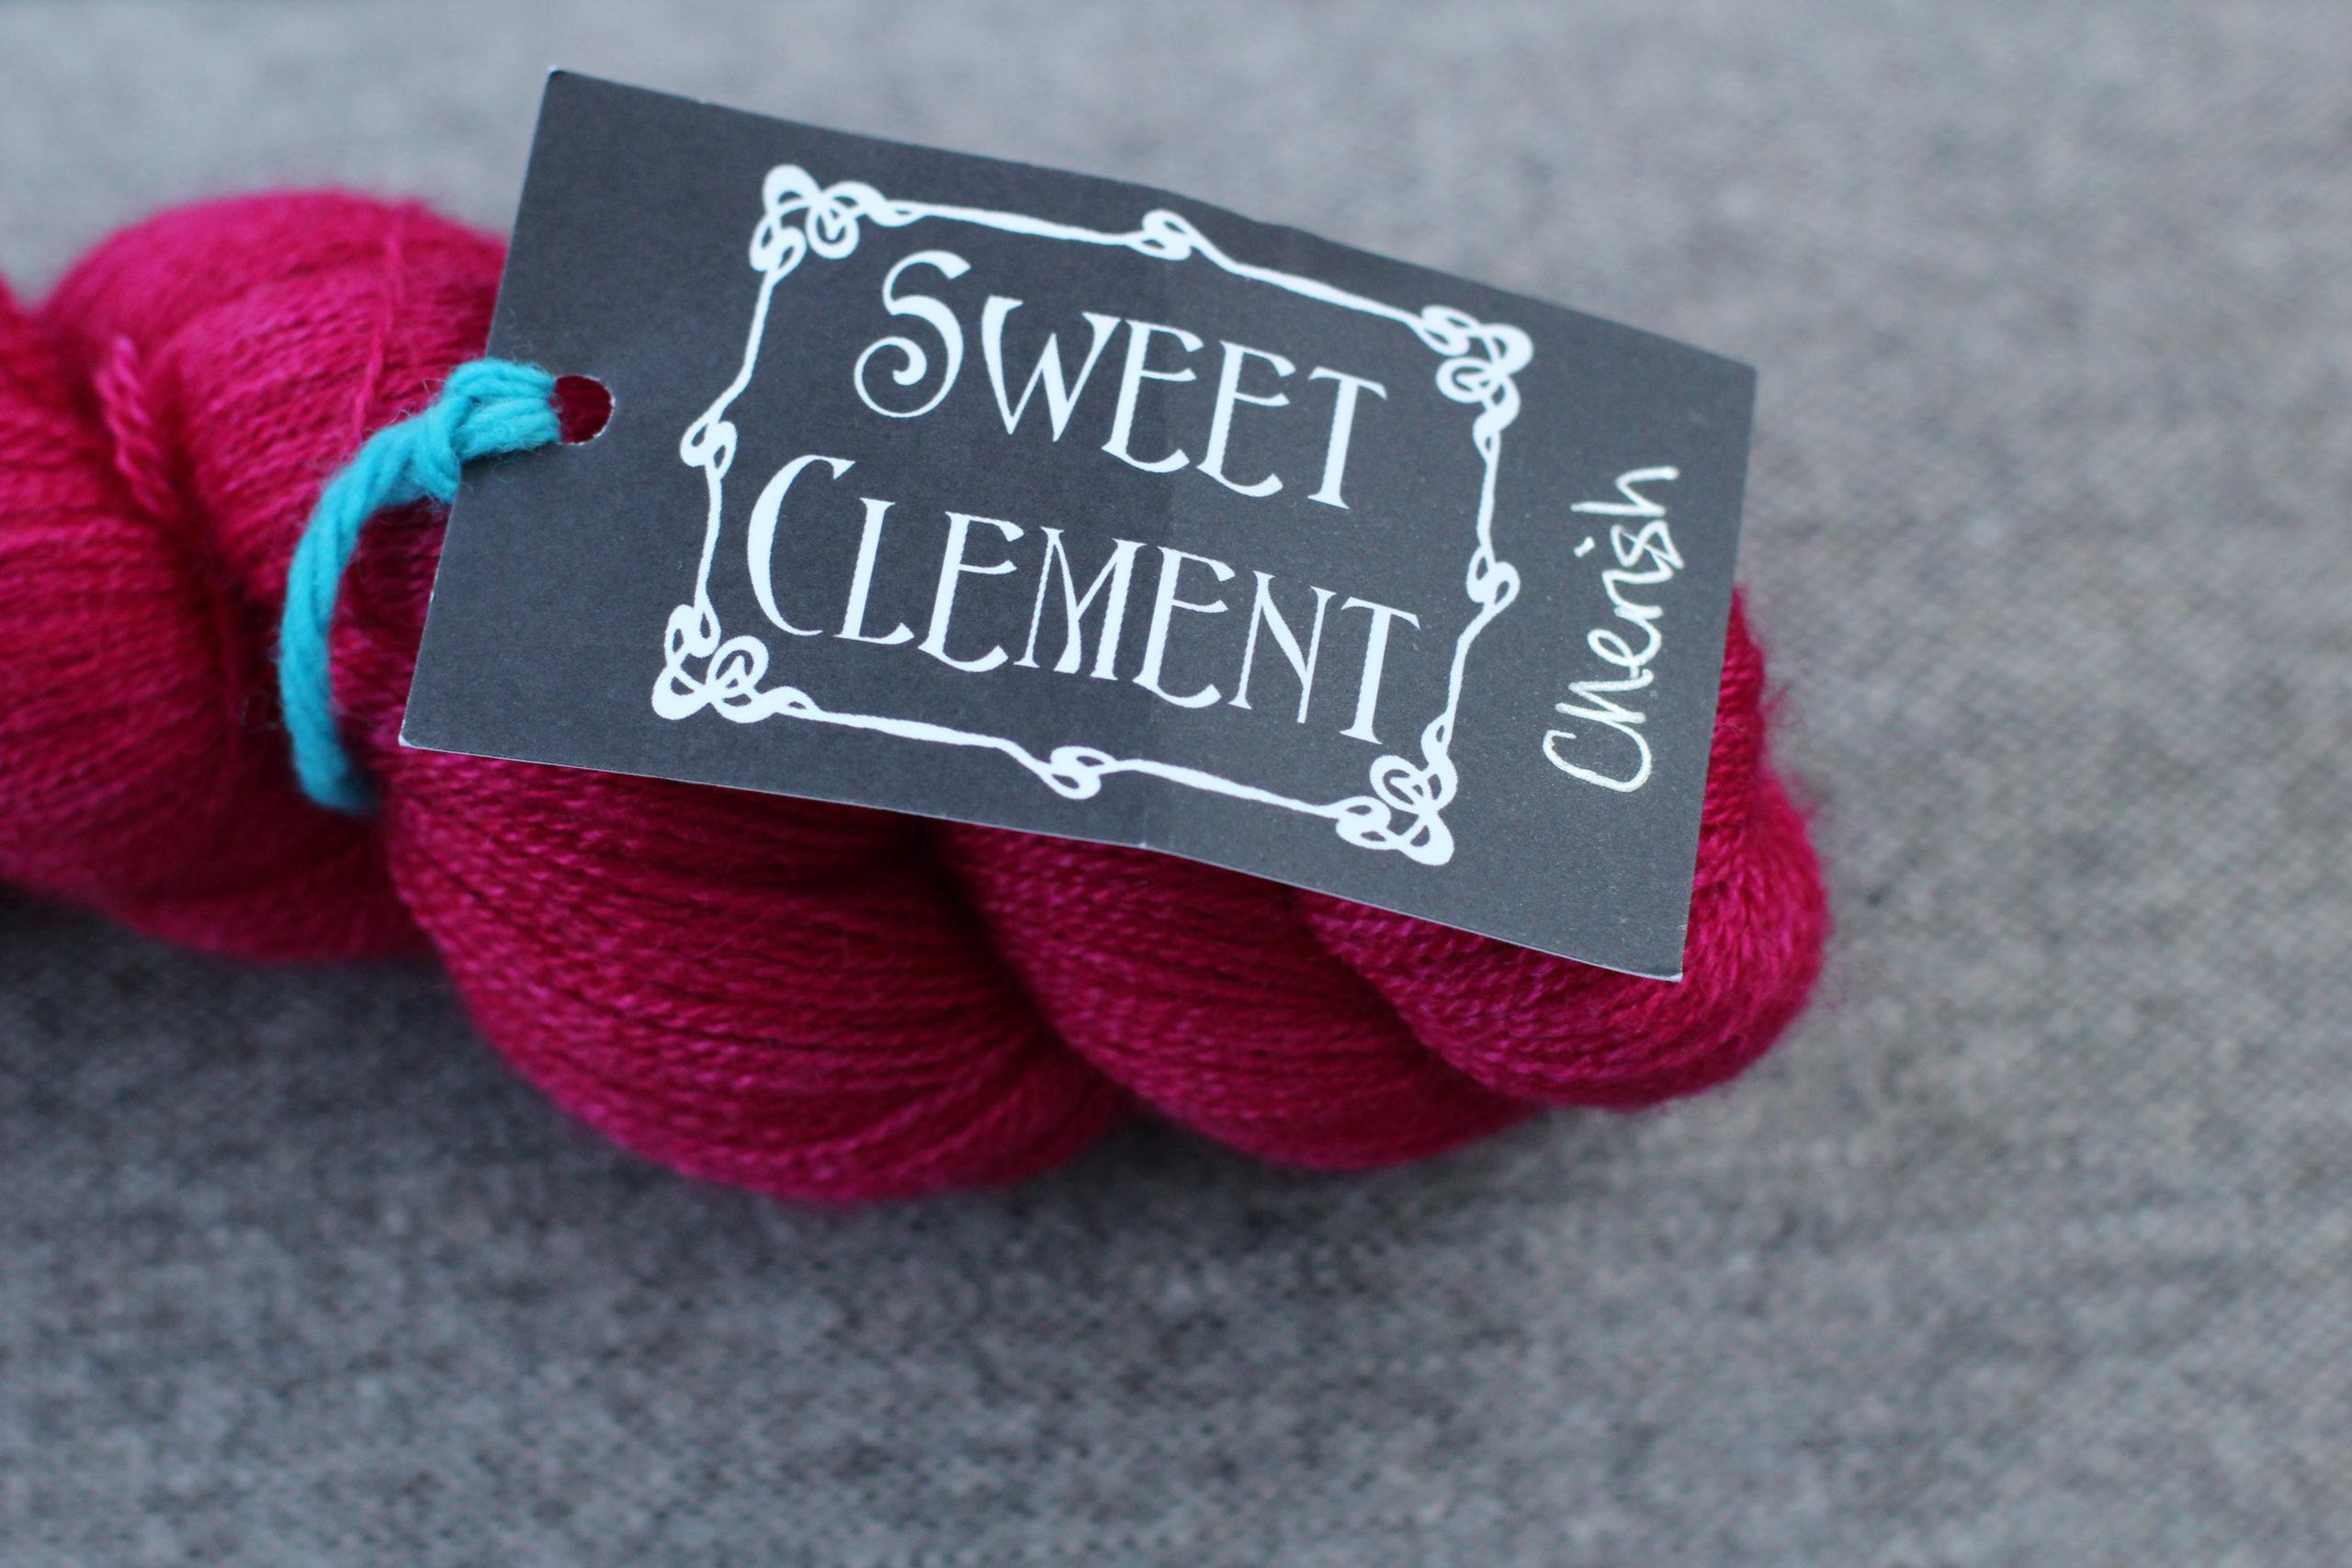 Sweet Clement yarn